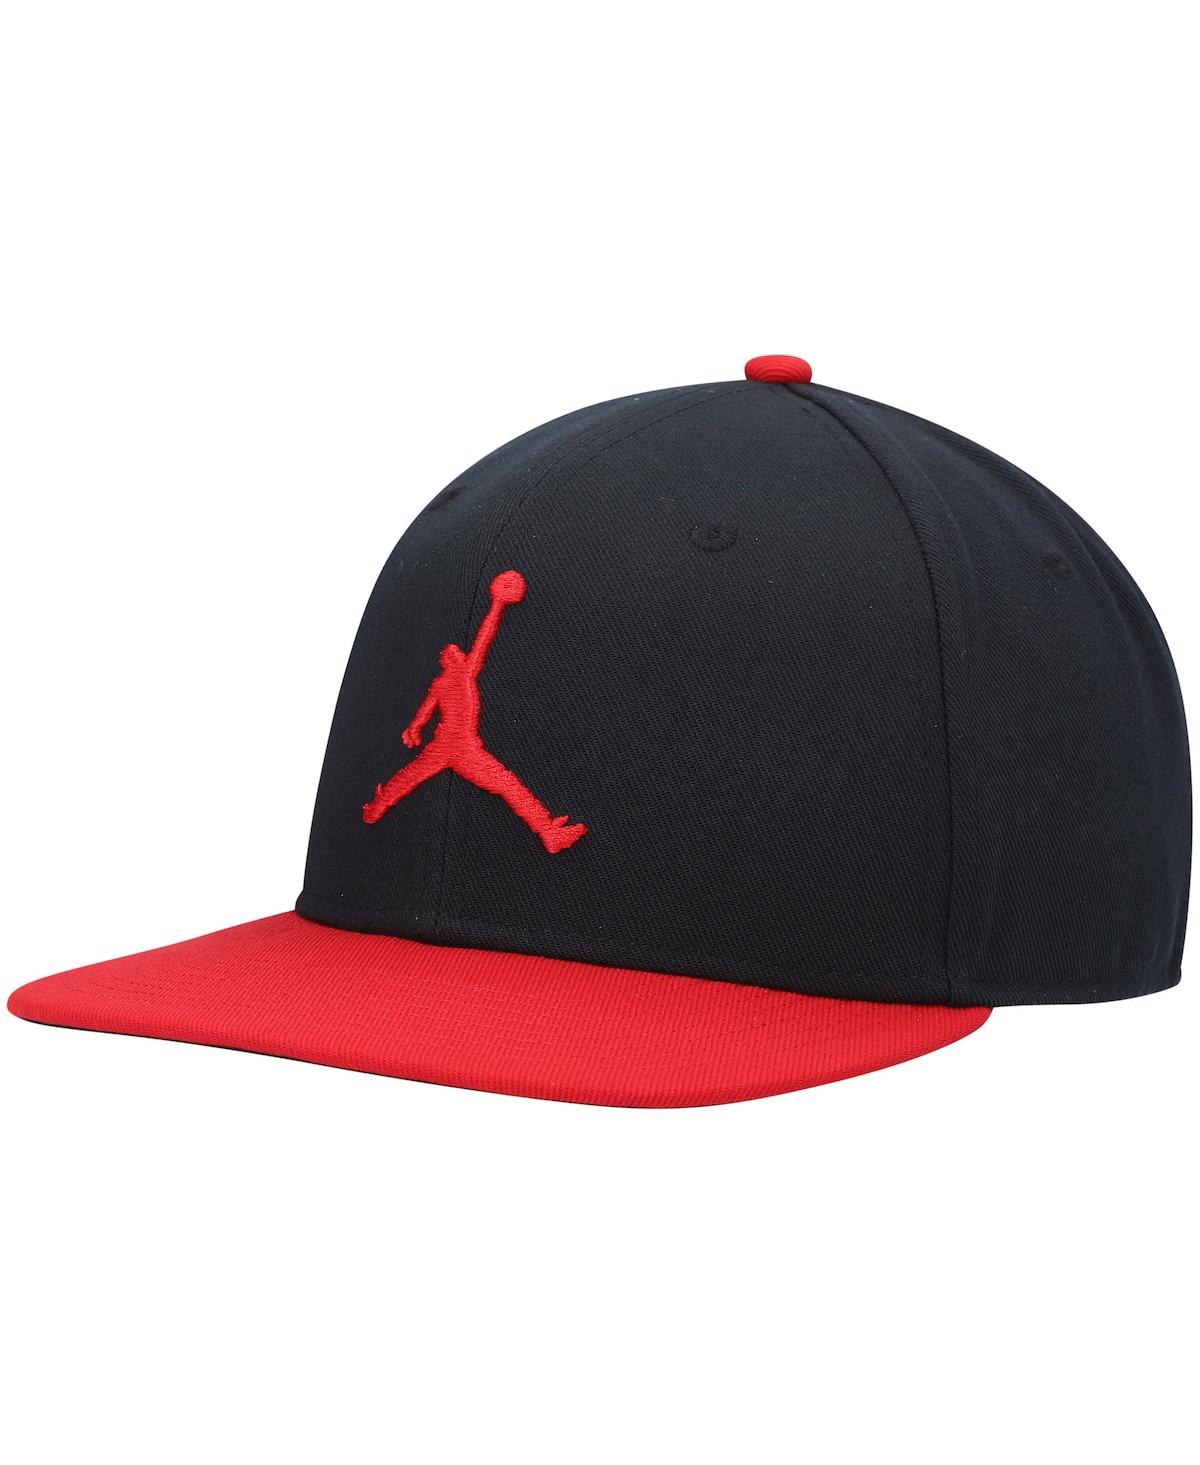 Men's Jordan White Jumpman Pro Logo Snapback Adjustable Hat - Black, Red